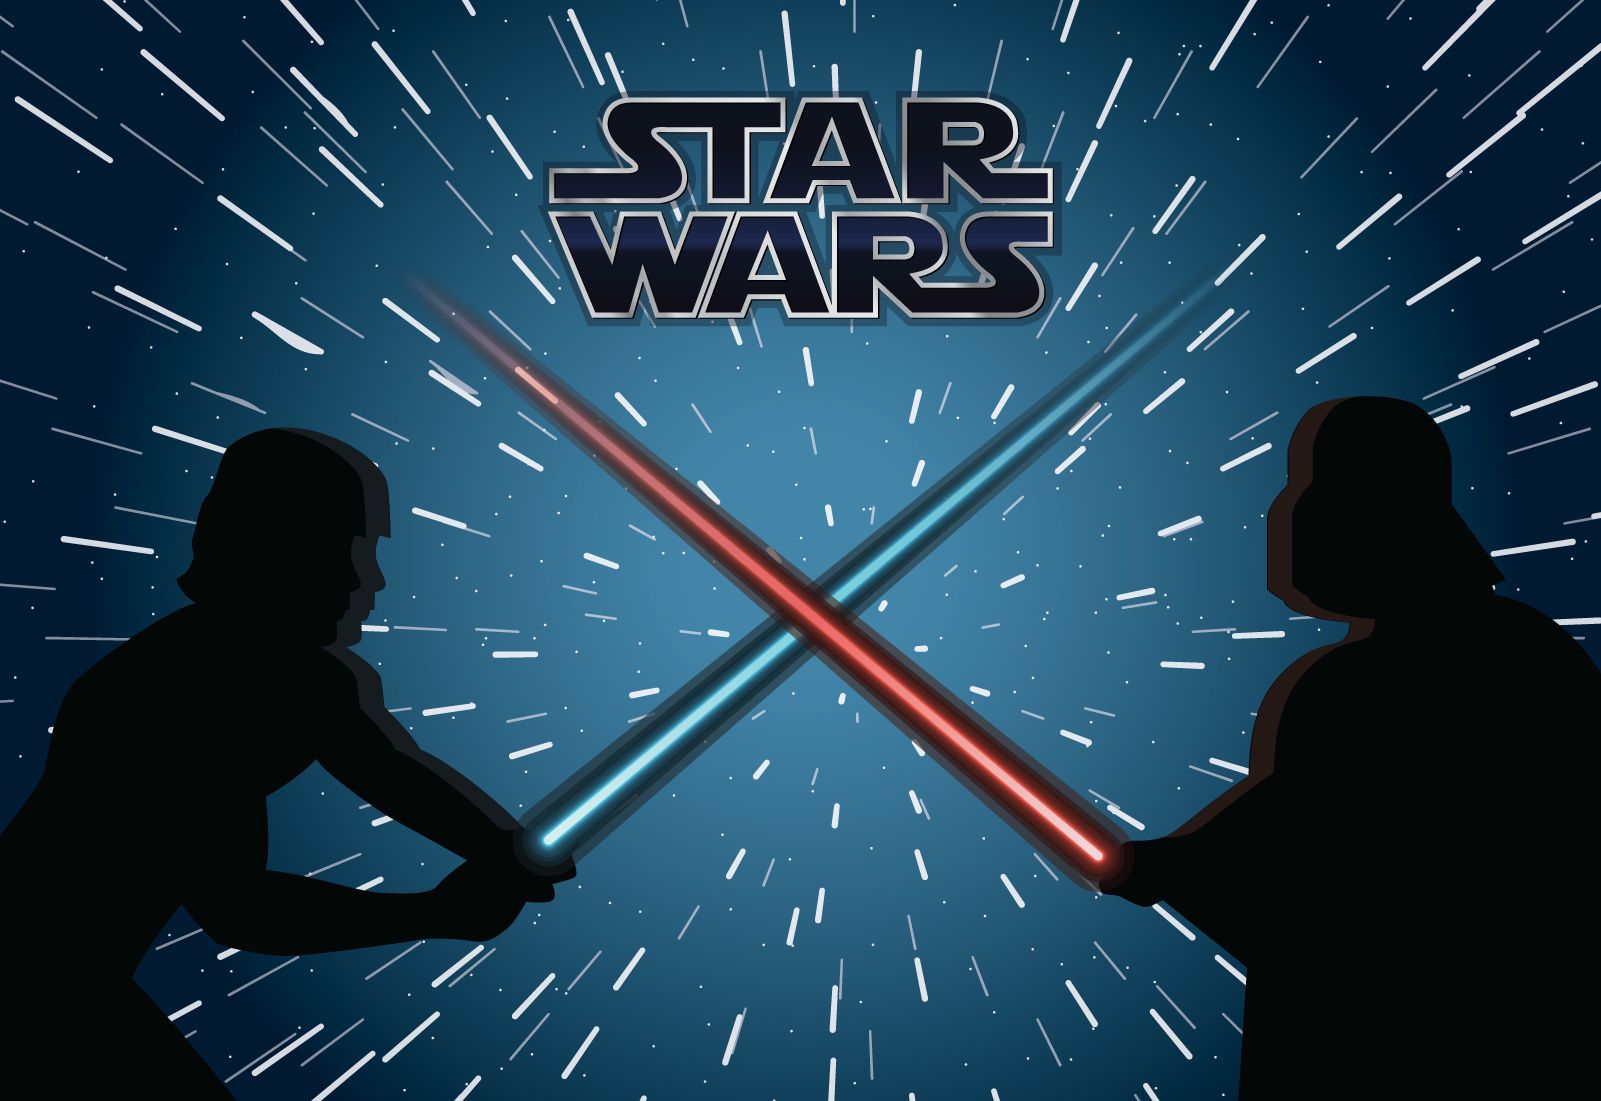 Star Wars Fight Illustration Vector Download